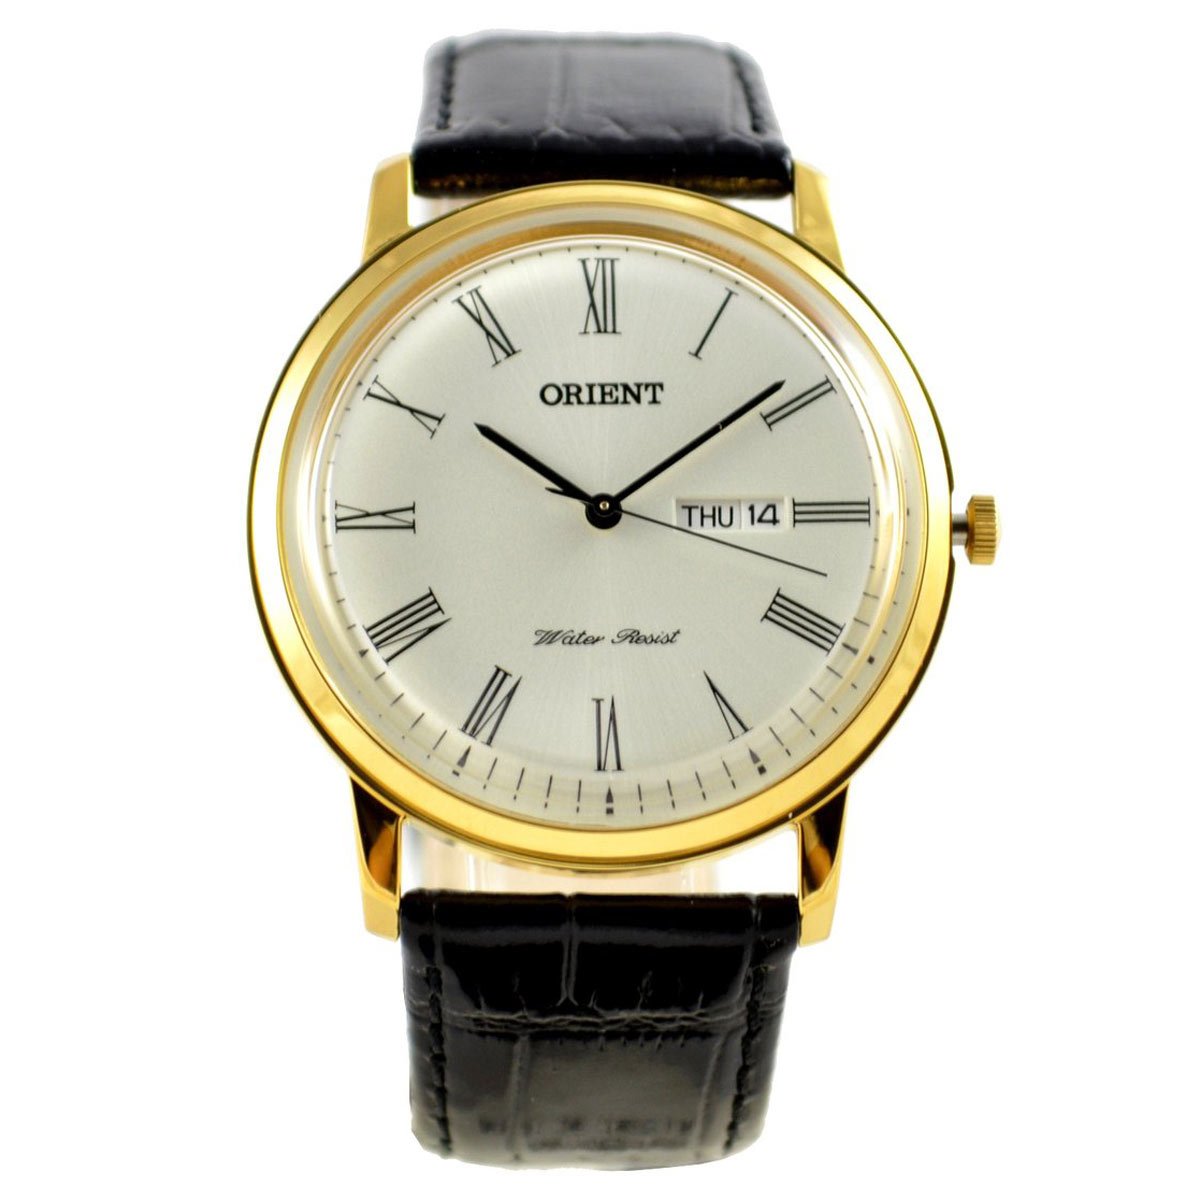 thin watches - Orient capital quartz version 2